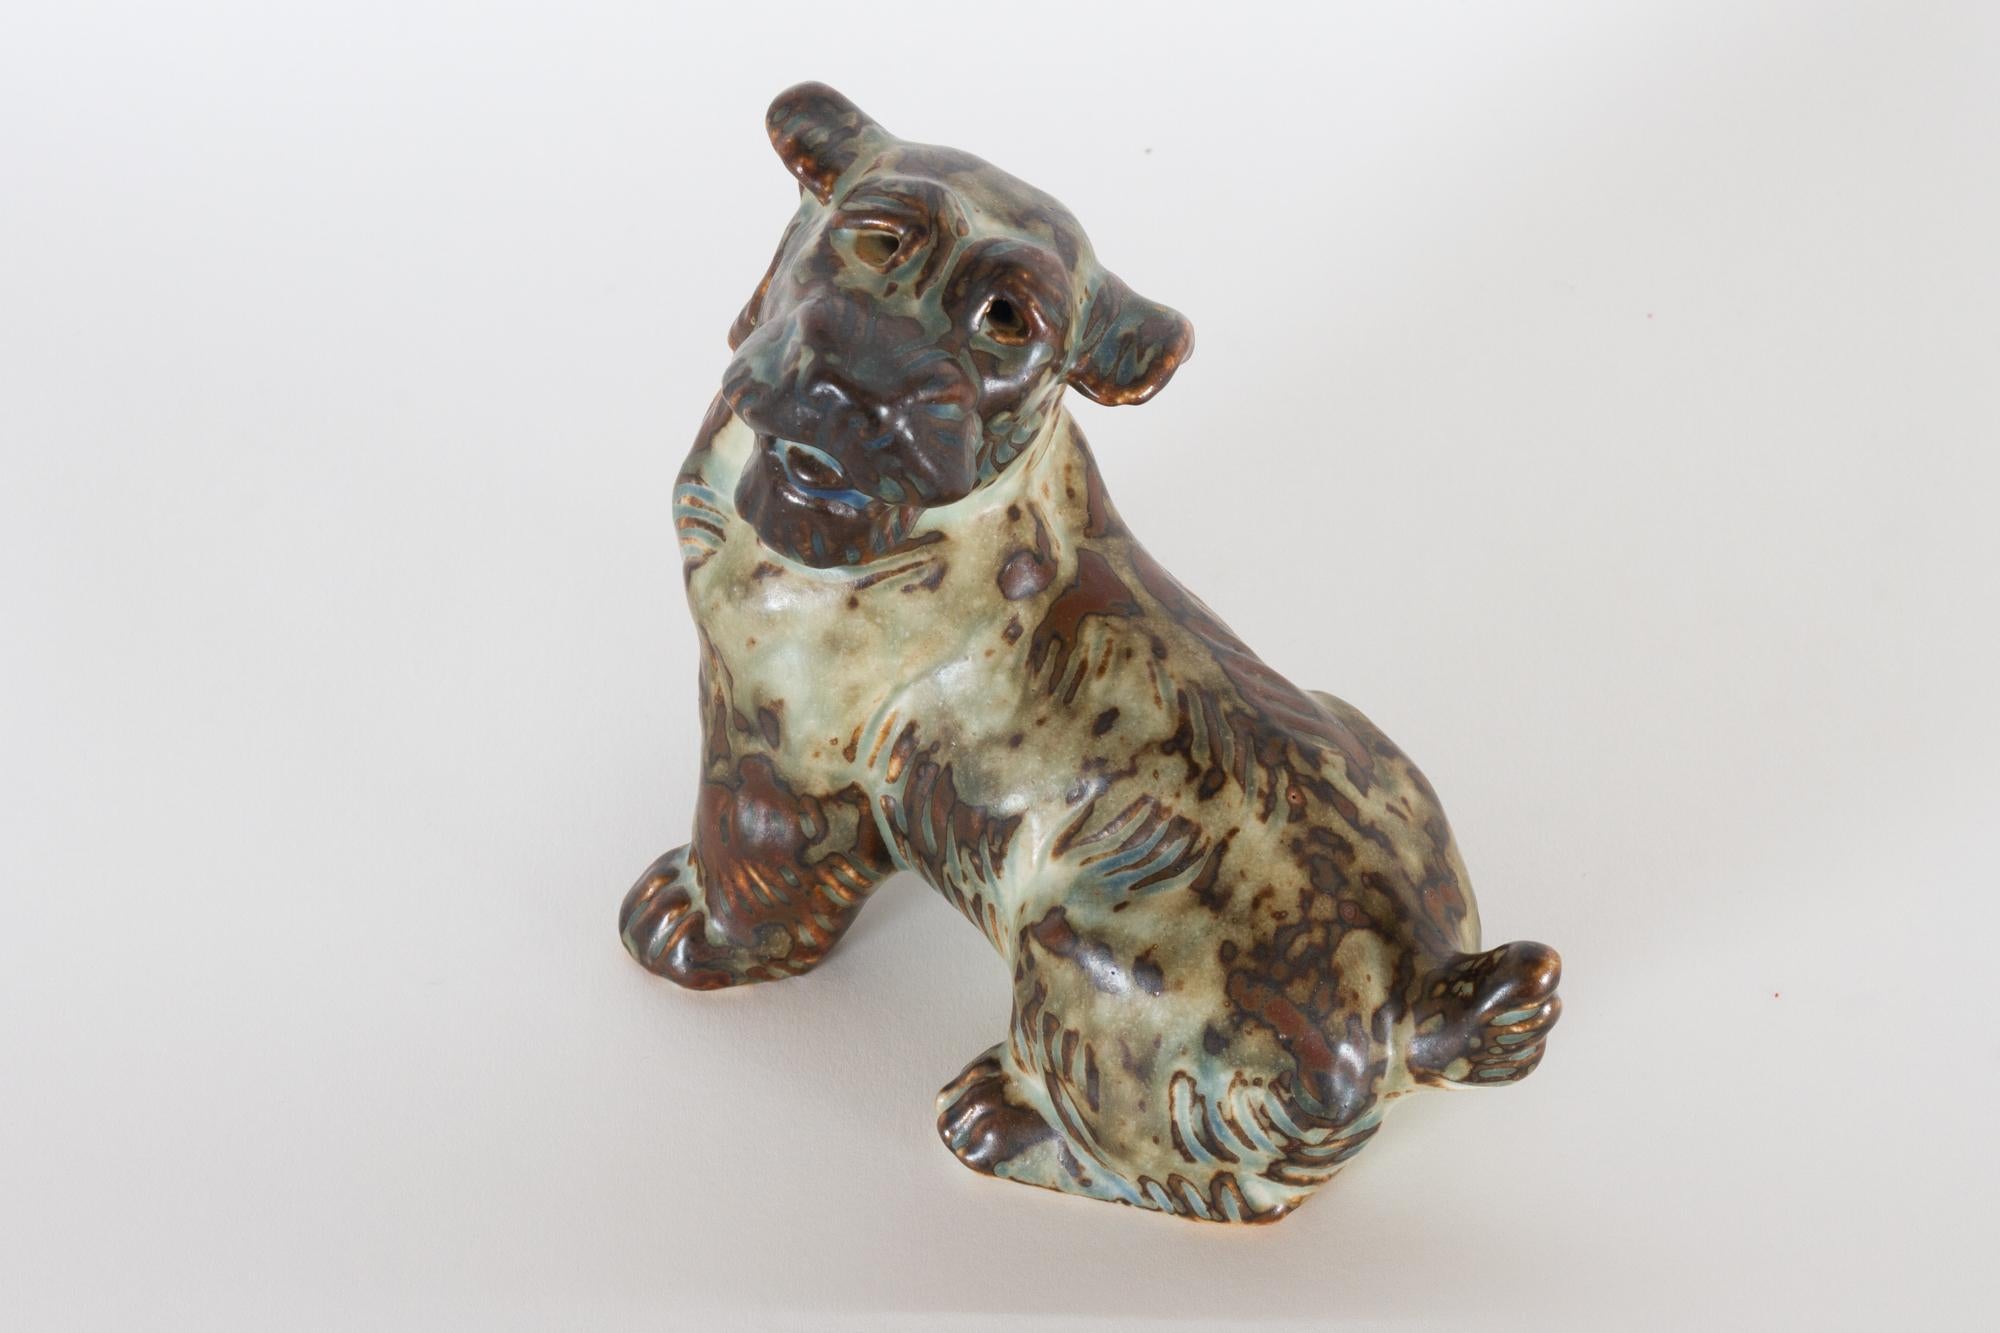 Vintage Danish Terrier Figurine by Knud Kyhn for Royal Copenhagen, 1955 For Sale 1